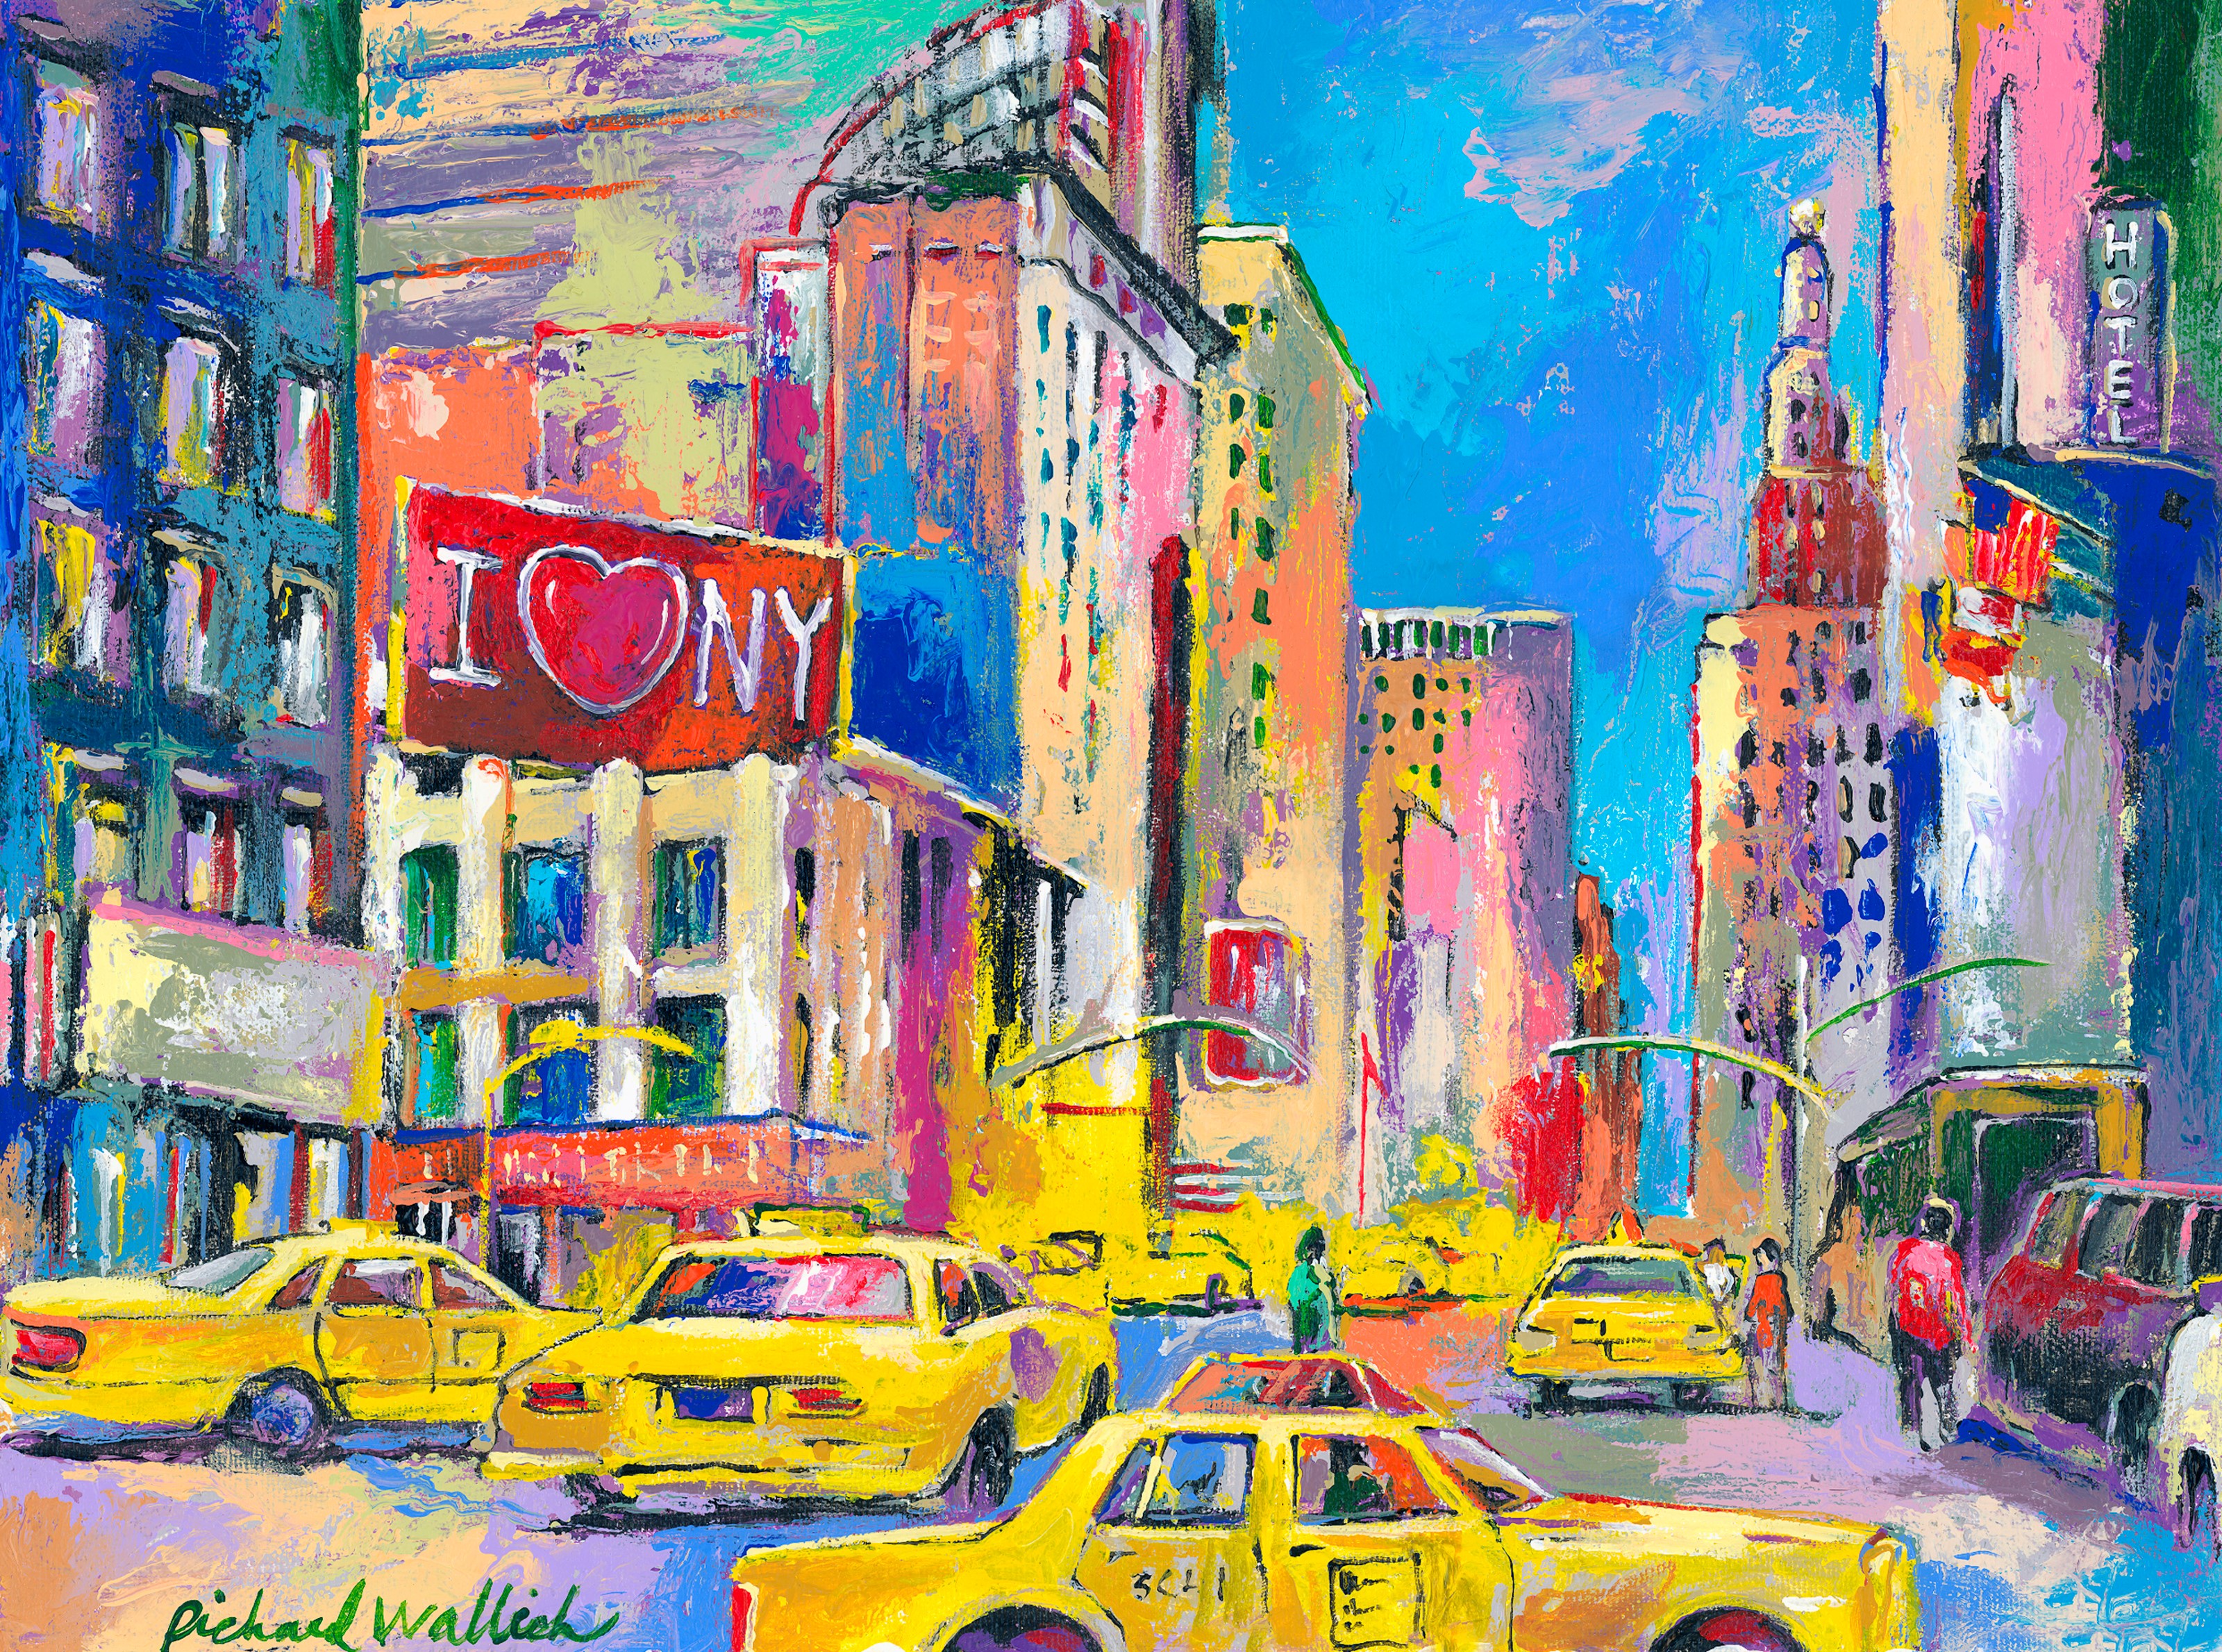 New York Taxi Murals Mural Wallpaper Way Your 